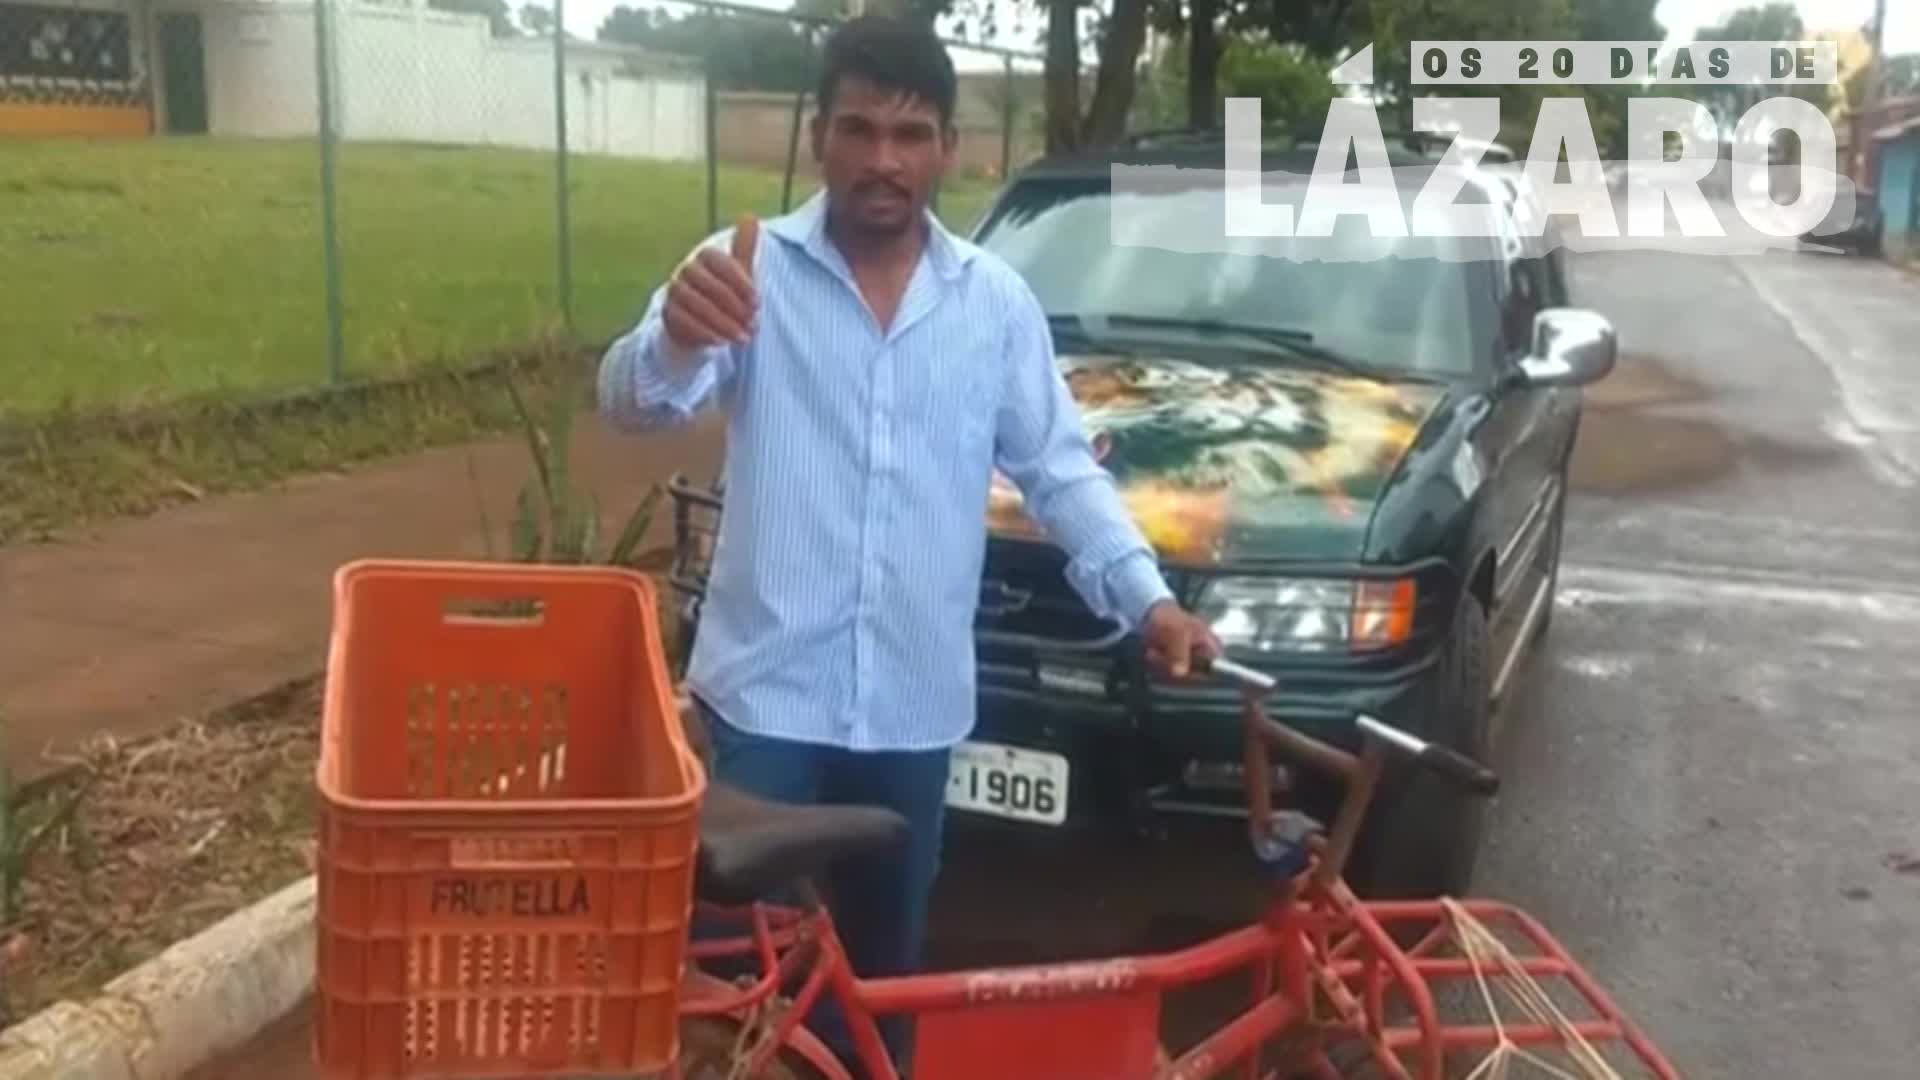 Vídeo: Os 20 Dias de Lázaro : vídeo mostra criminoso agradecendo por ganhar bicicleta